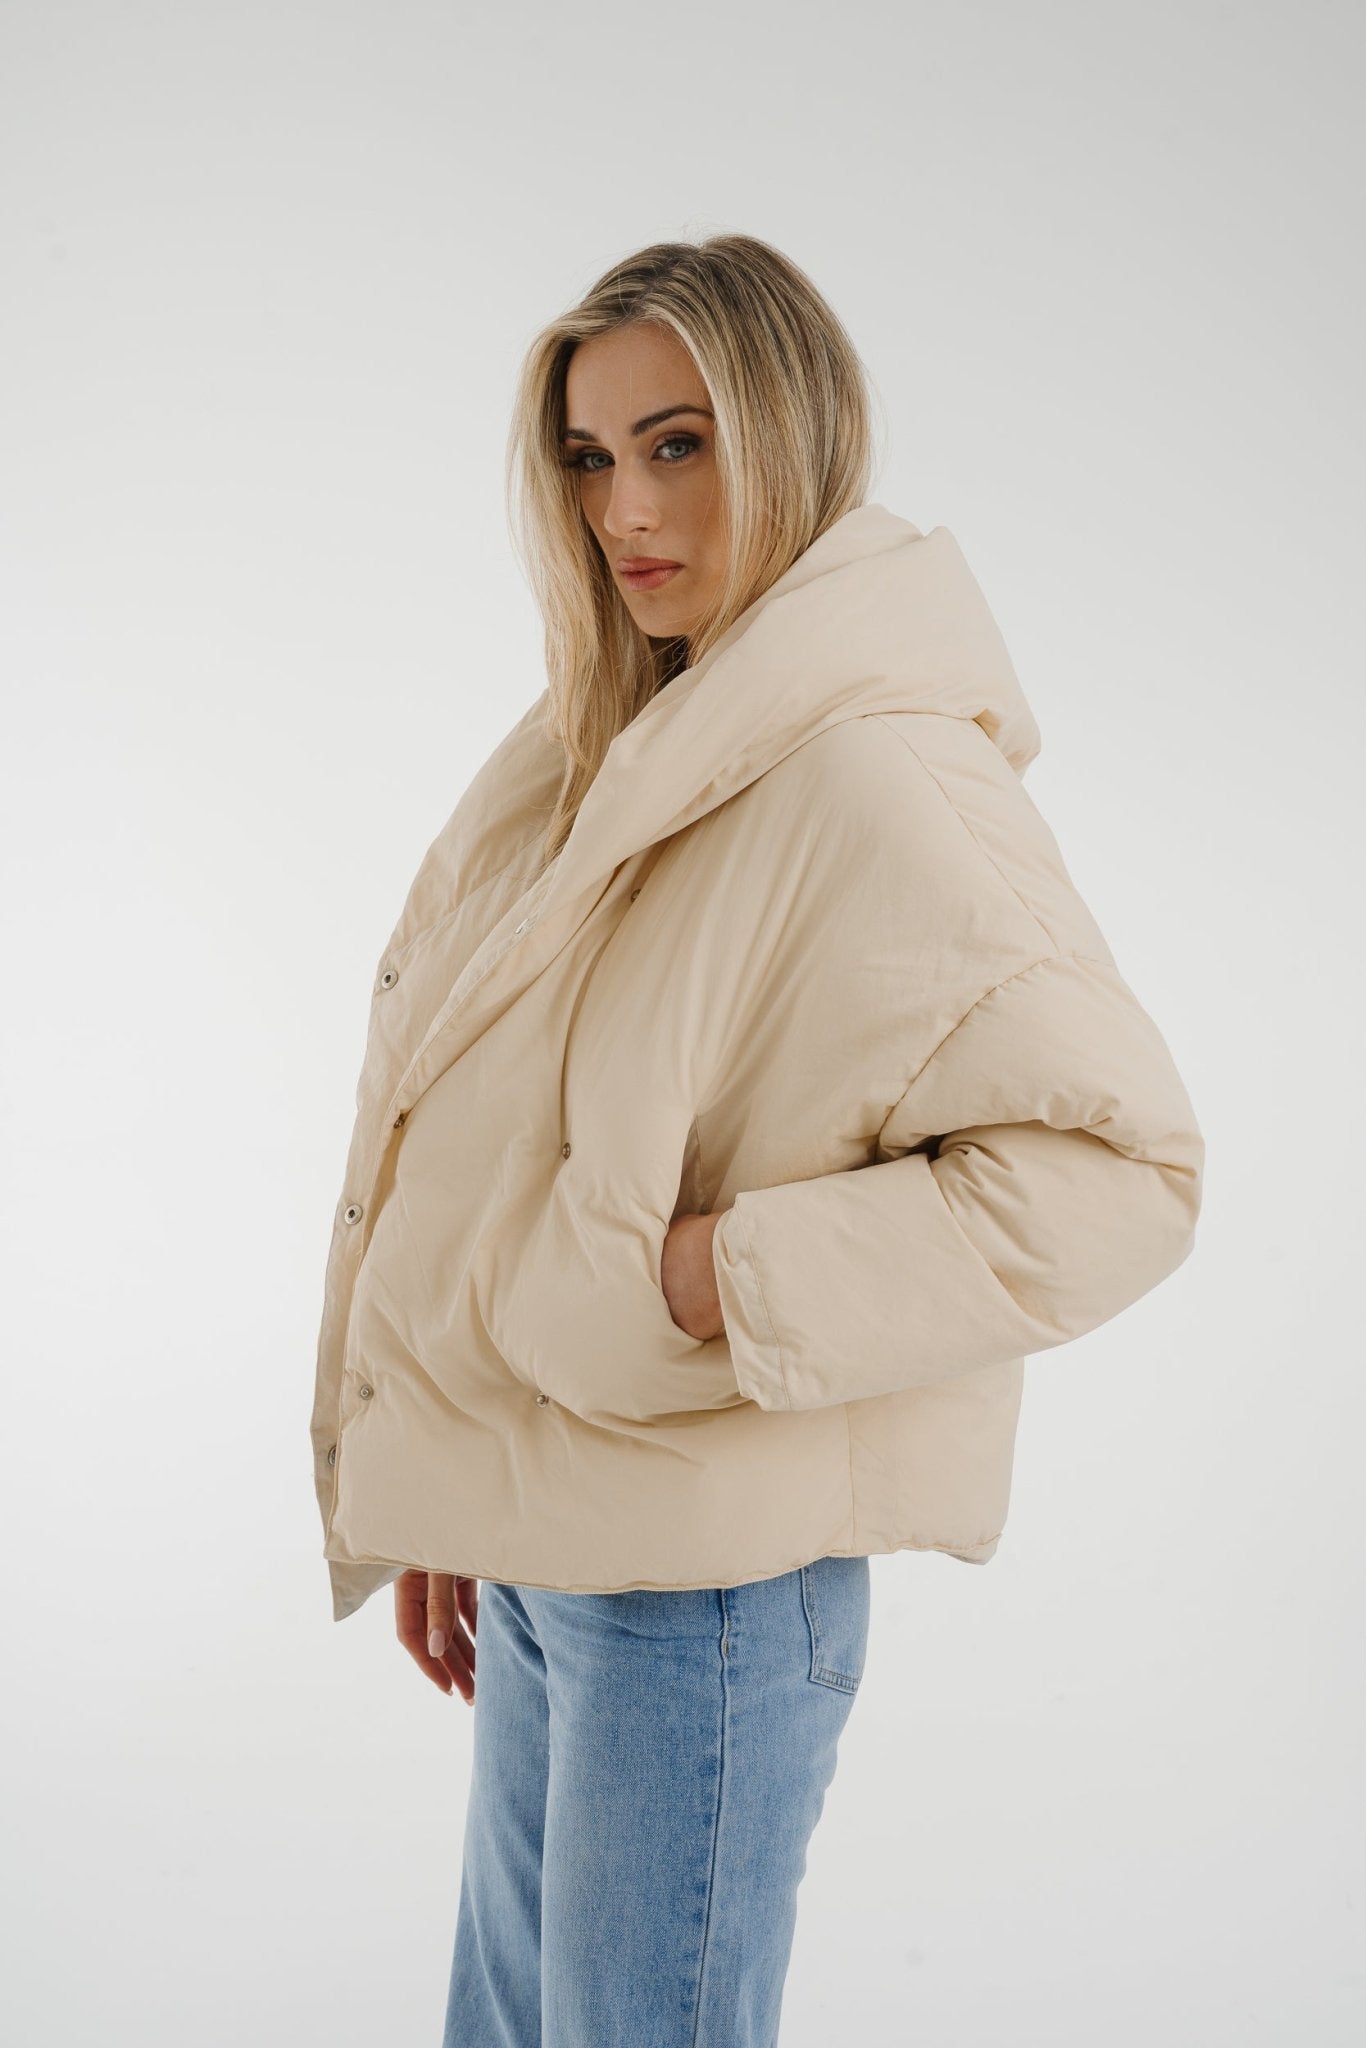 Cora Hooded Coat In Cream - The Walk in Wardrobe